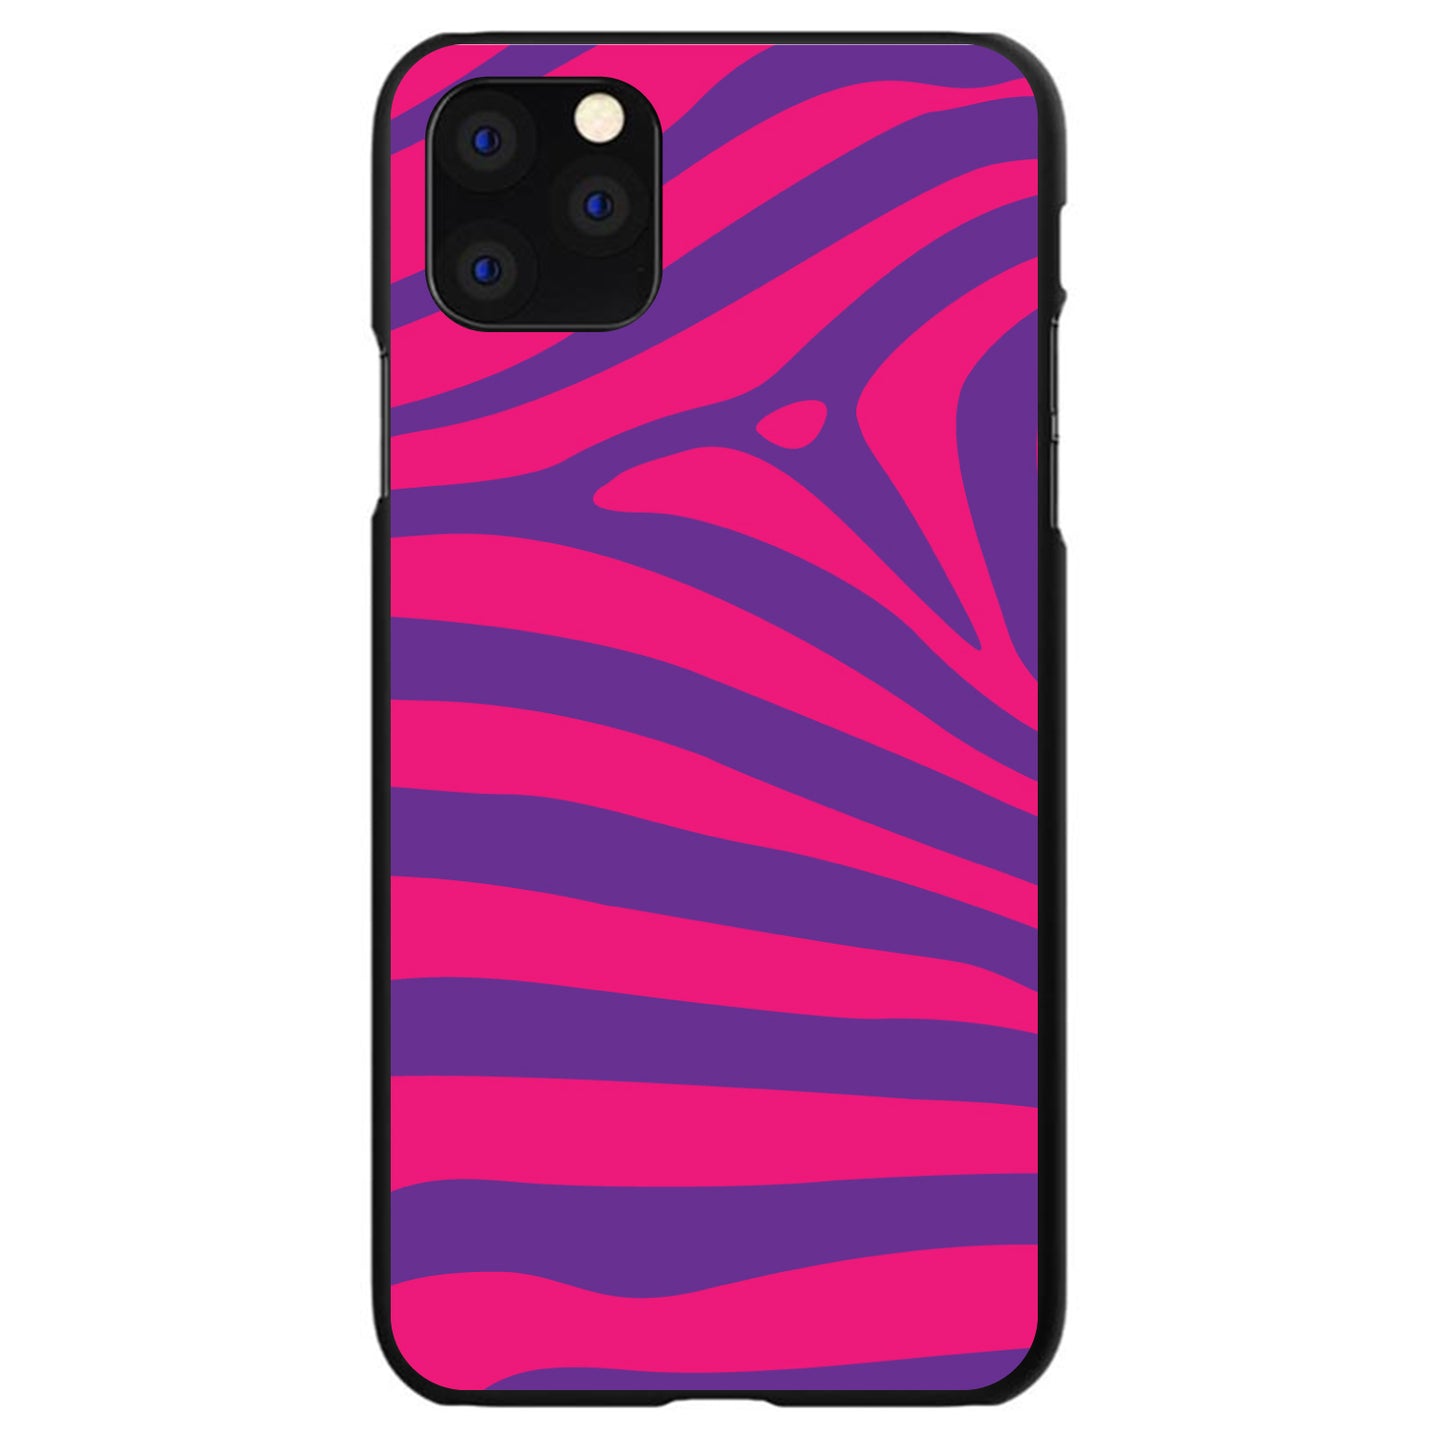 DistinctInk® Hard Plastic Snap-On Case for Apple iPhone or Samsung Galaxy - Purple Hot Pink Zebra Skin Stripes